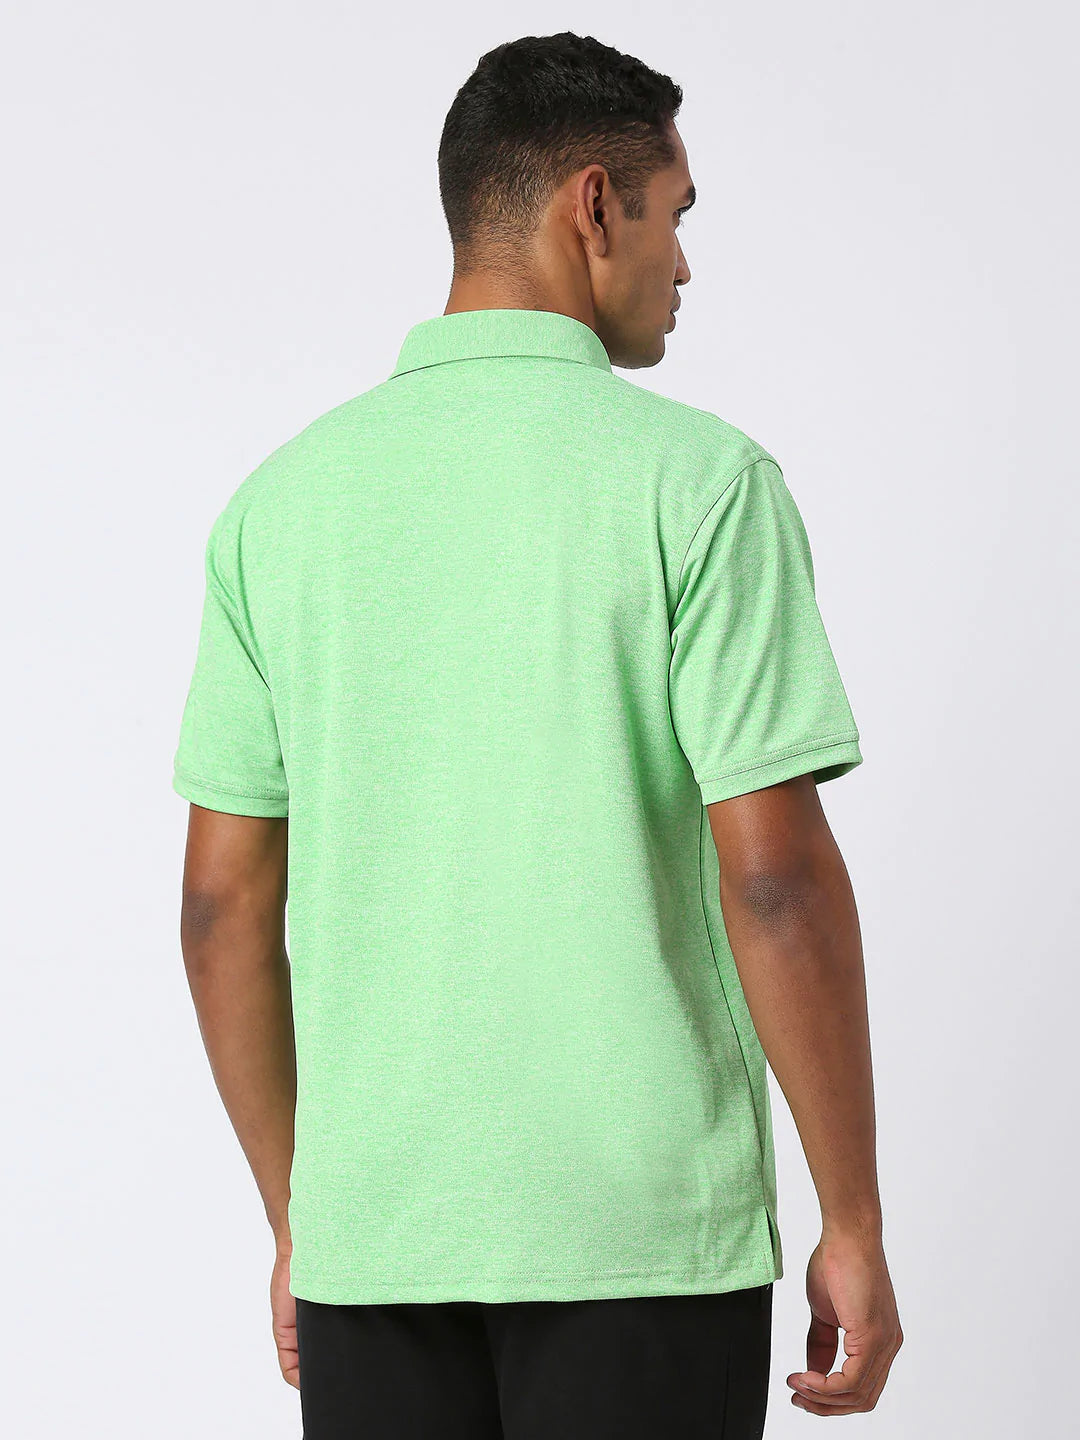 Men's Sports Polo Shirt - Mint Green - Front